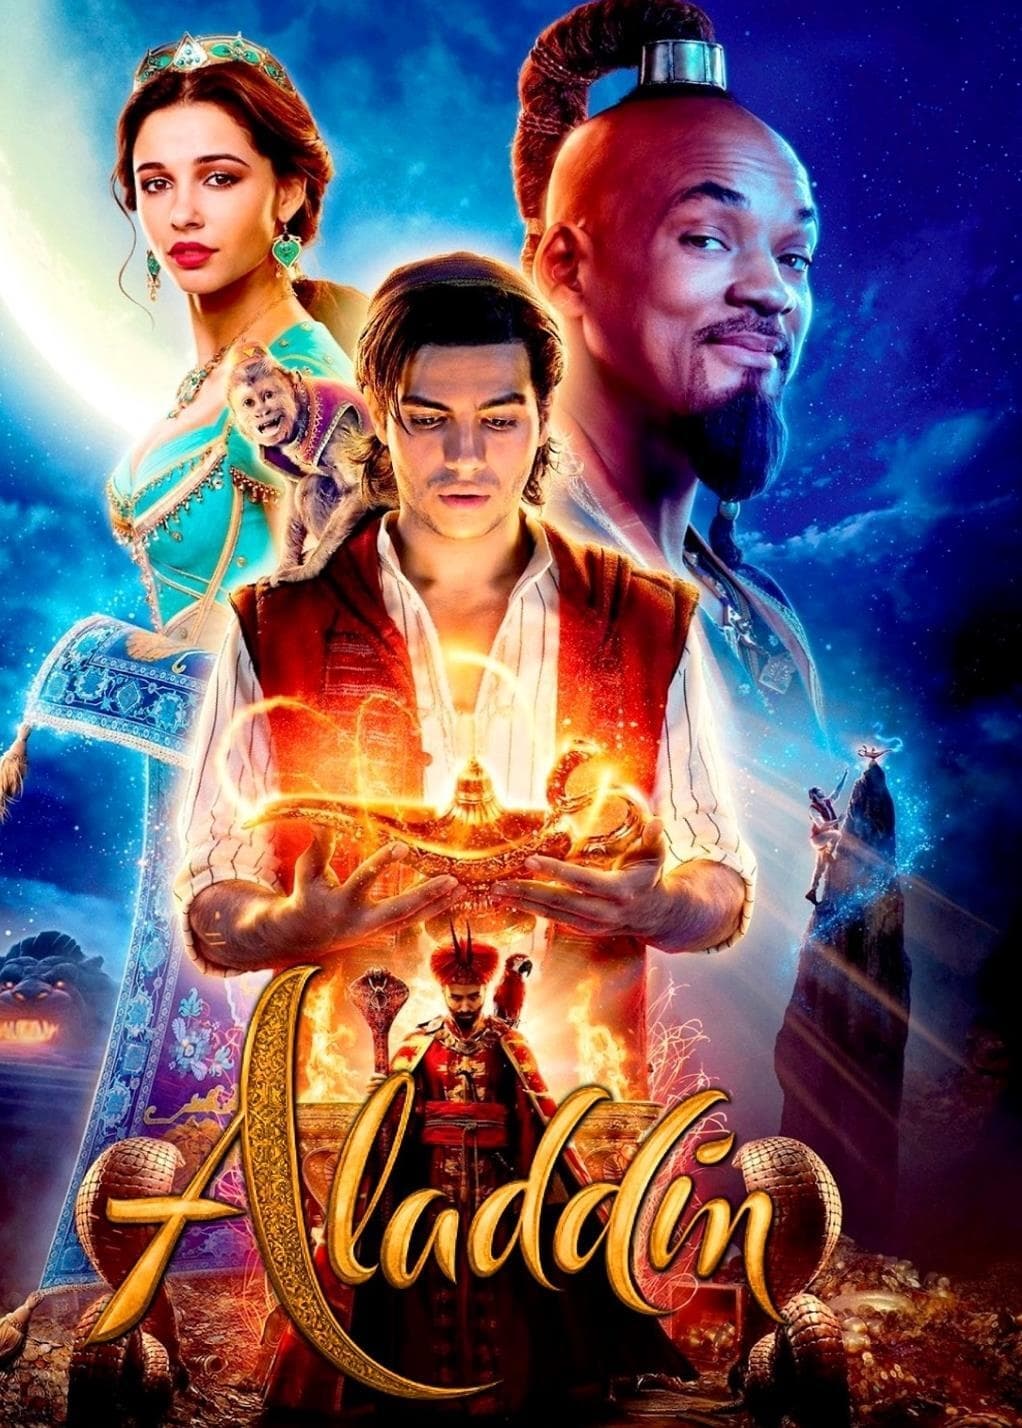 Aladdin teljes online videa